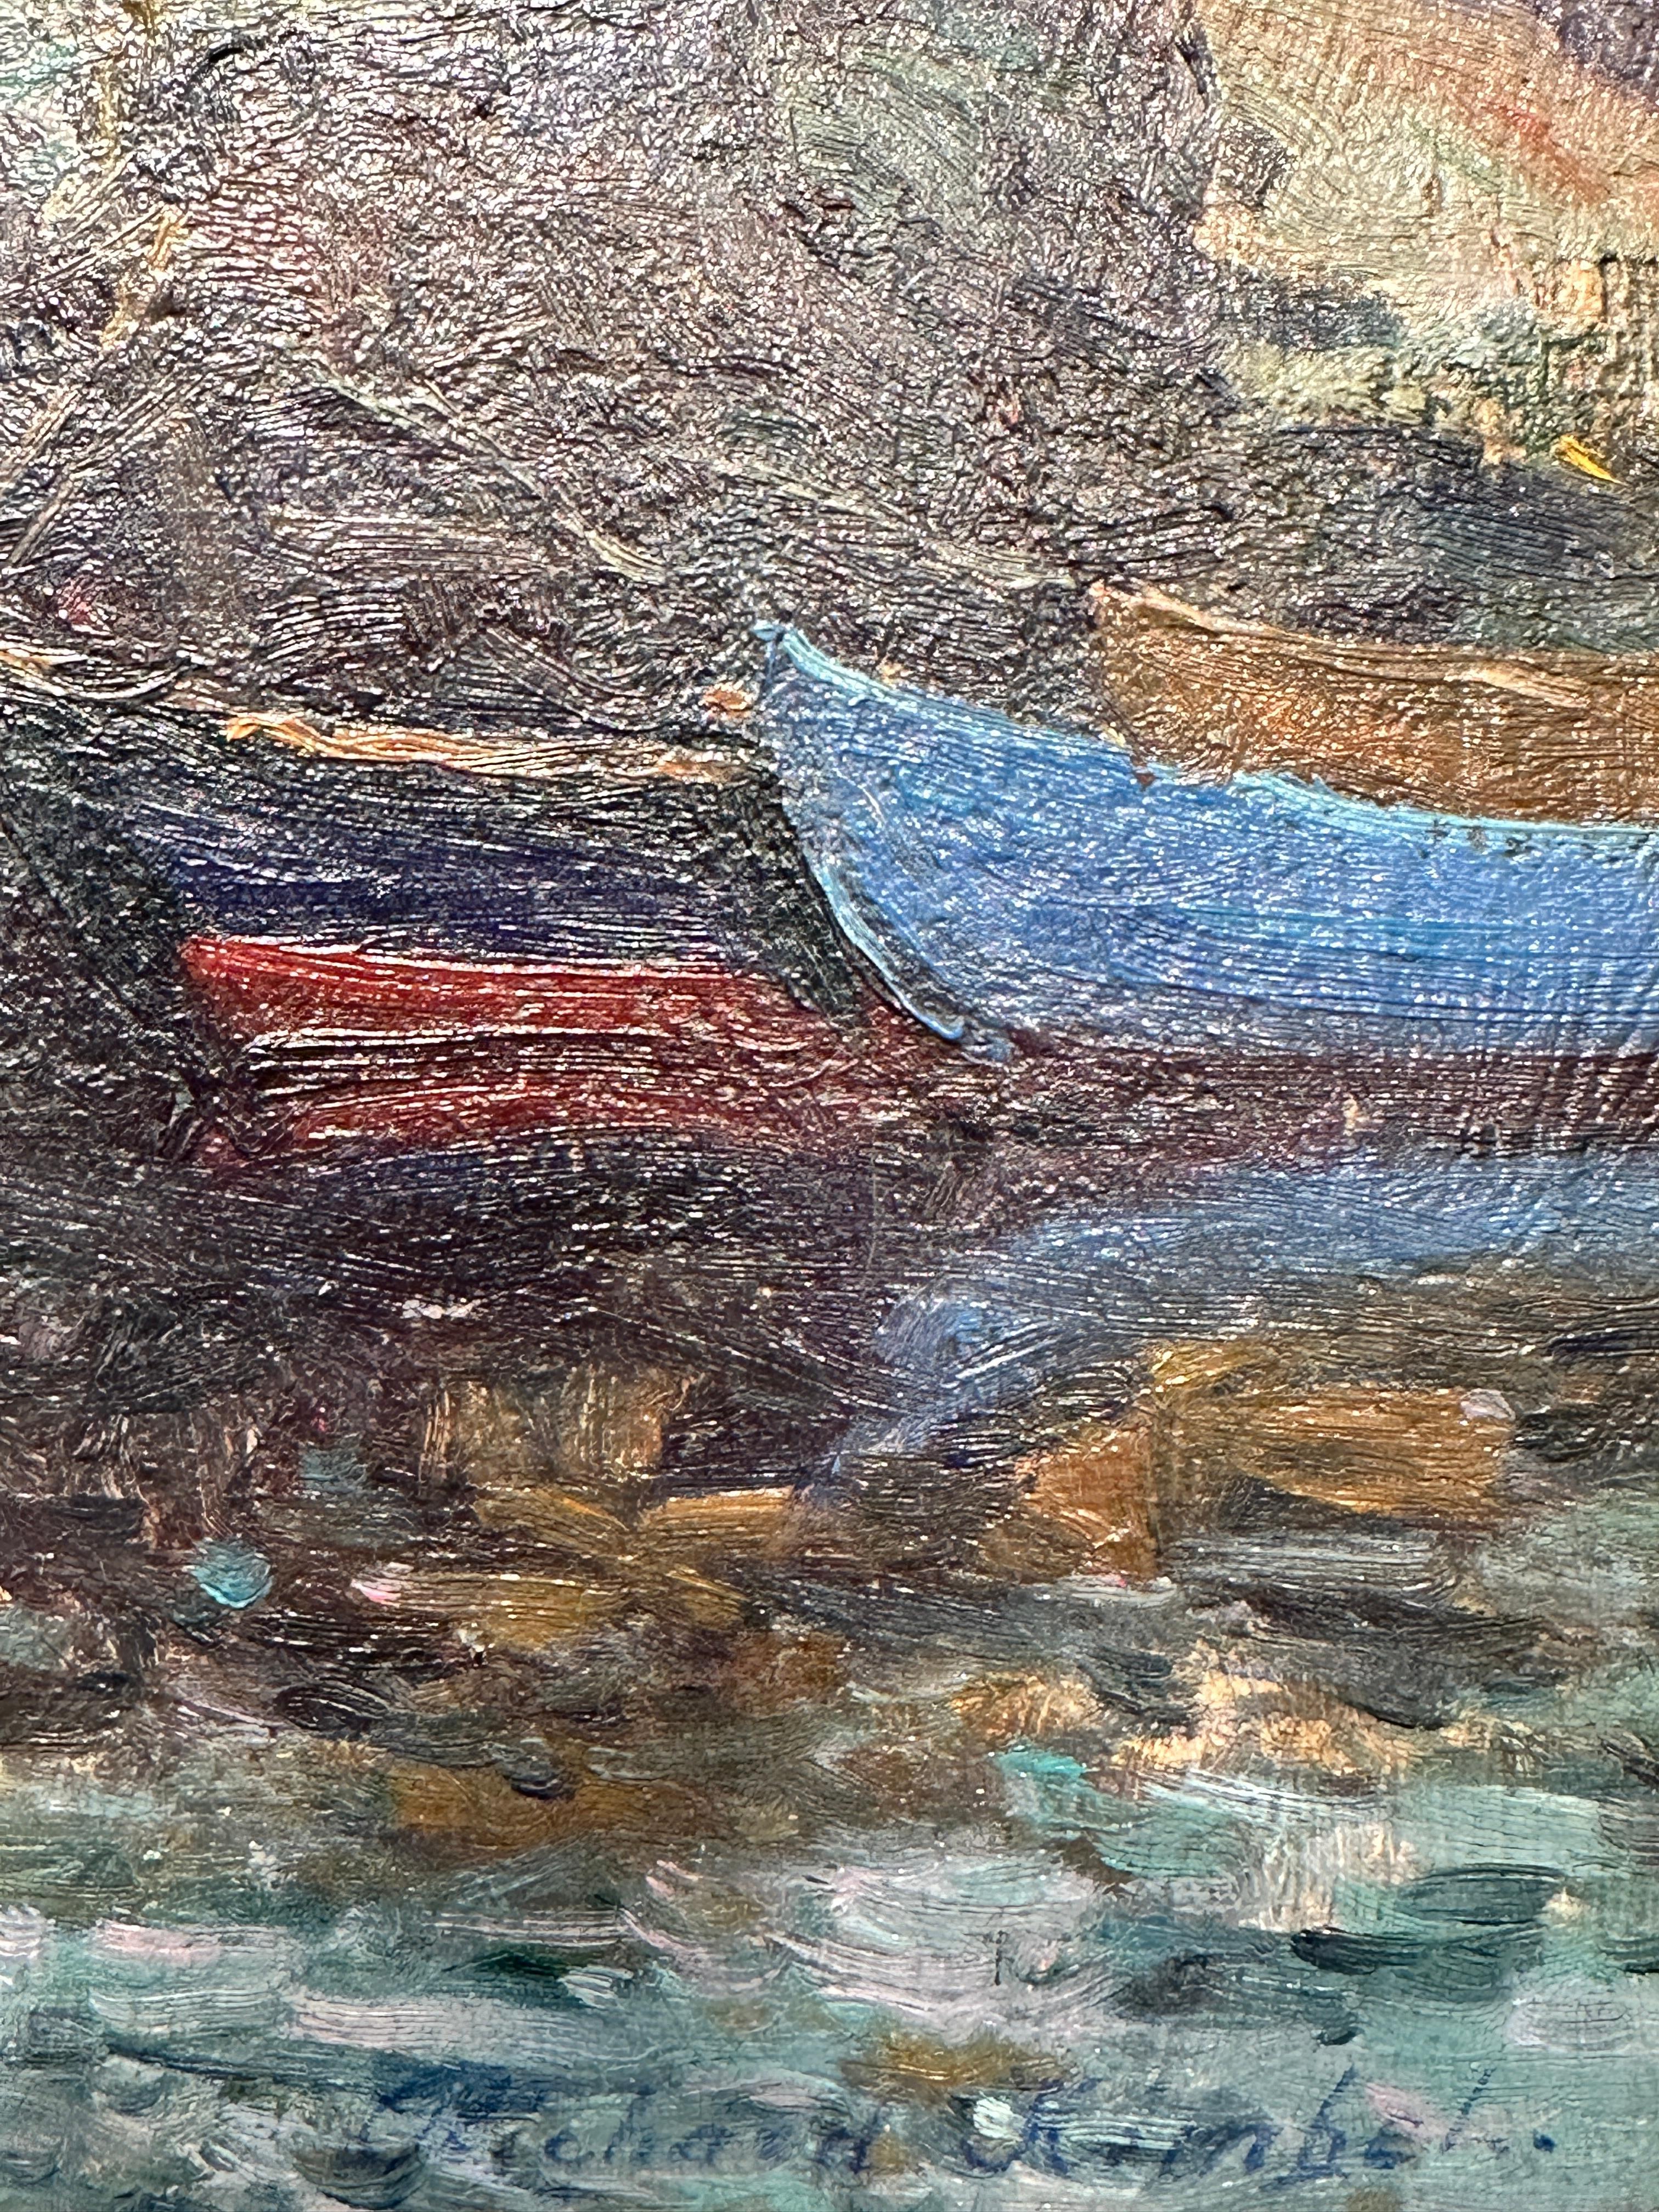 “Mending Nets”, Rockport, MA, bearskin neck Seascape of Fishermen working - Painting by Richard Kimbel